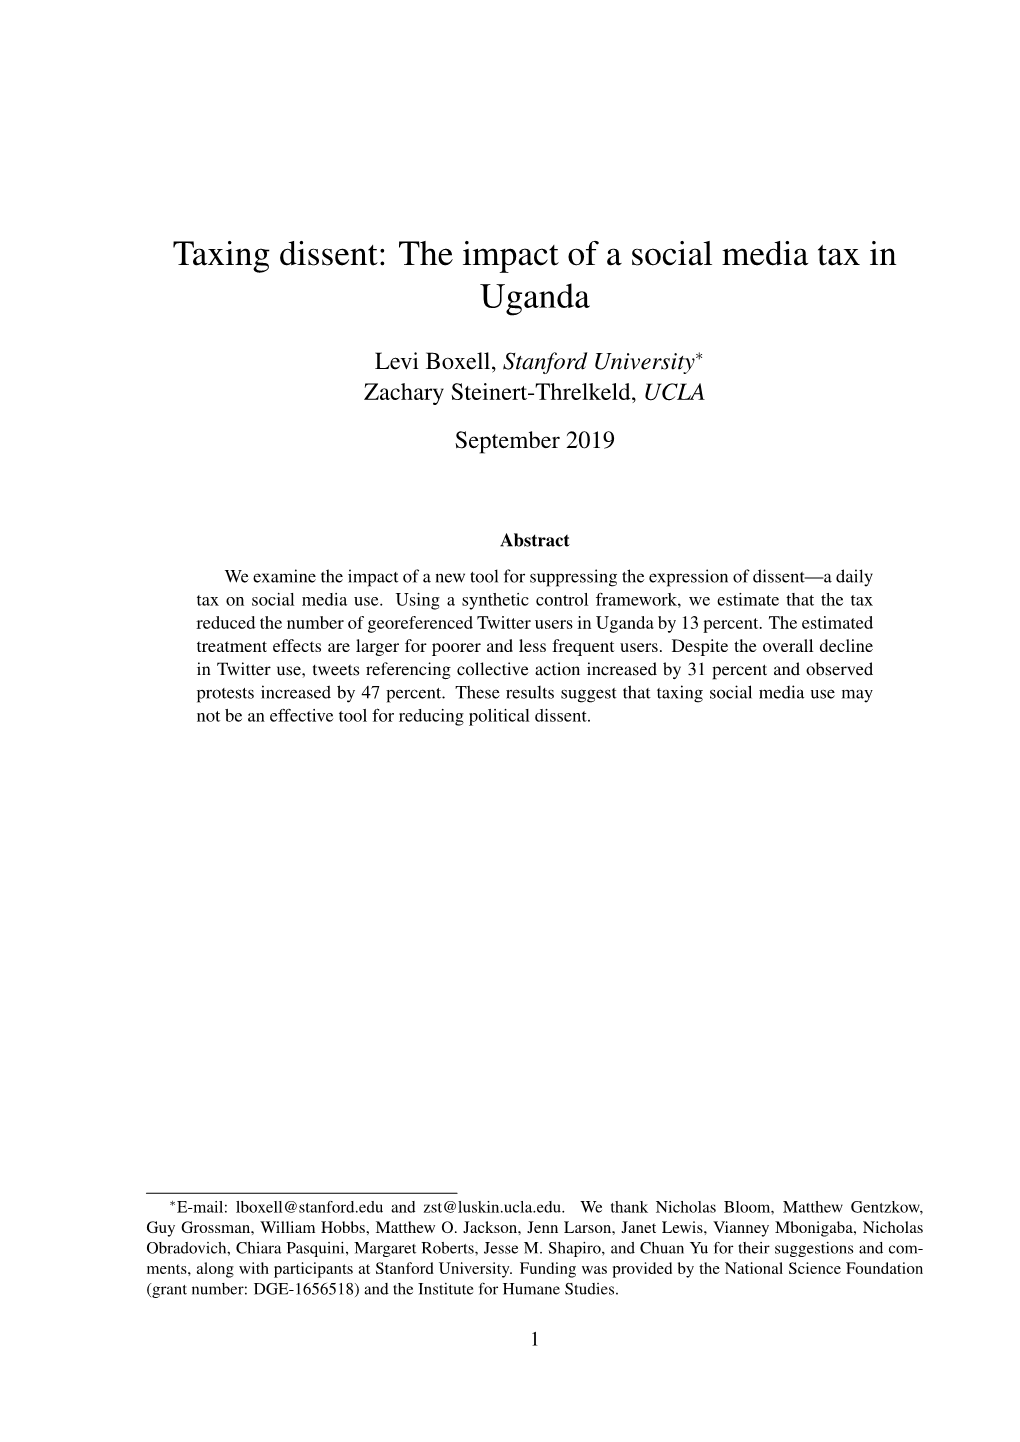 The Impact of a Social Media Tax in Uganda